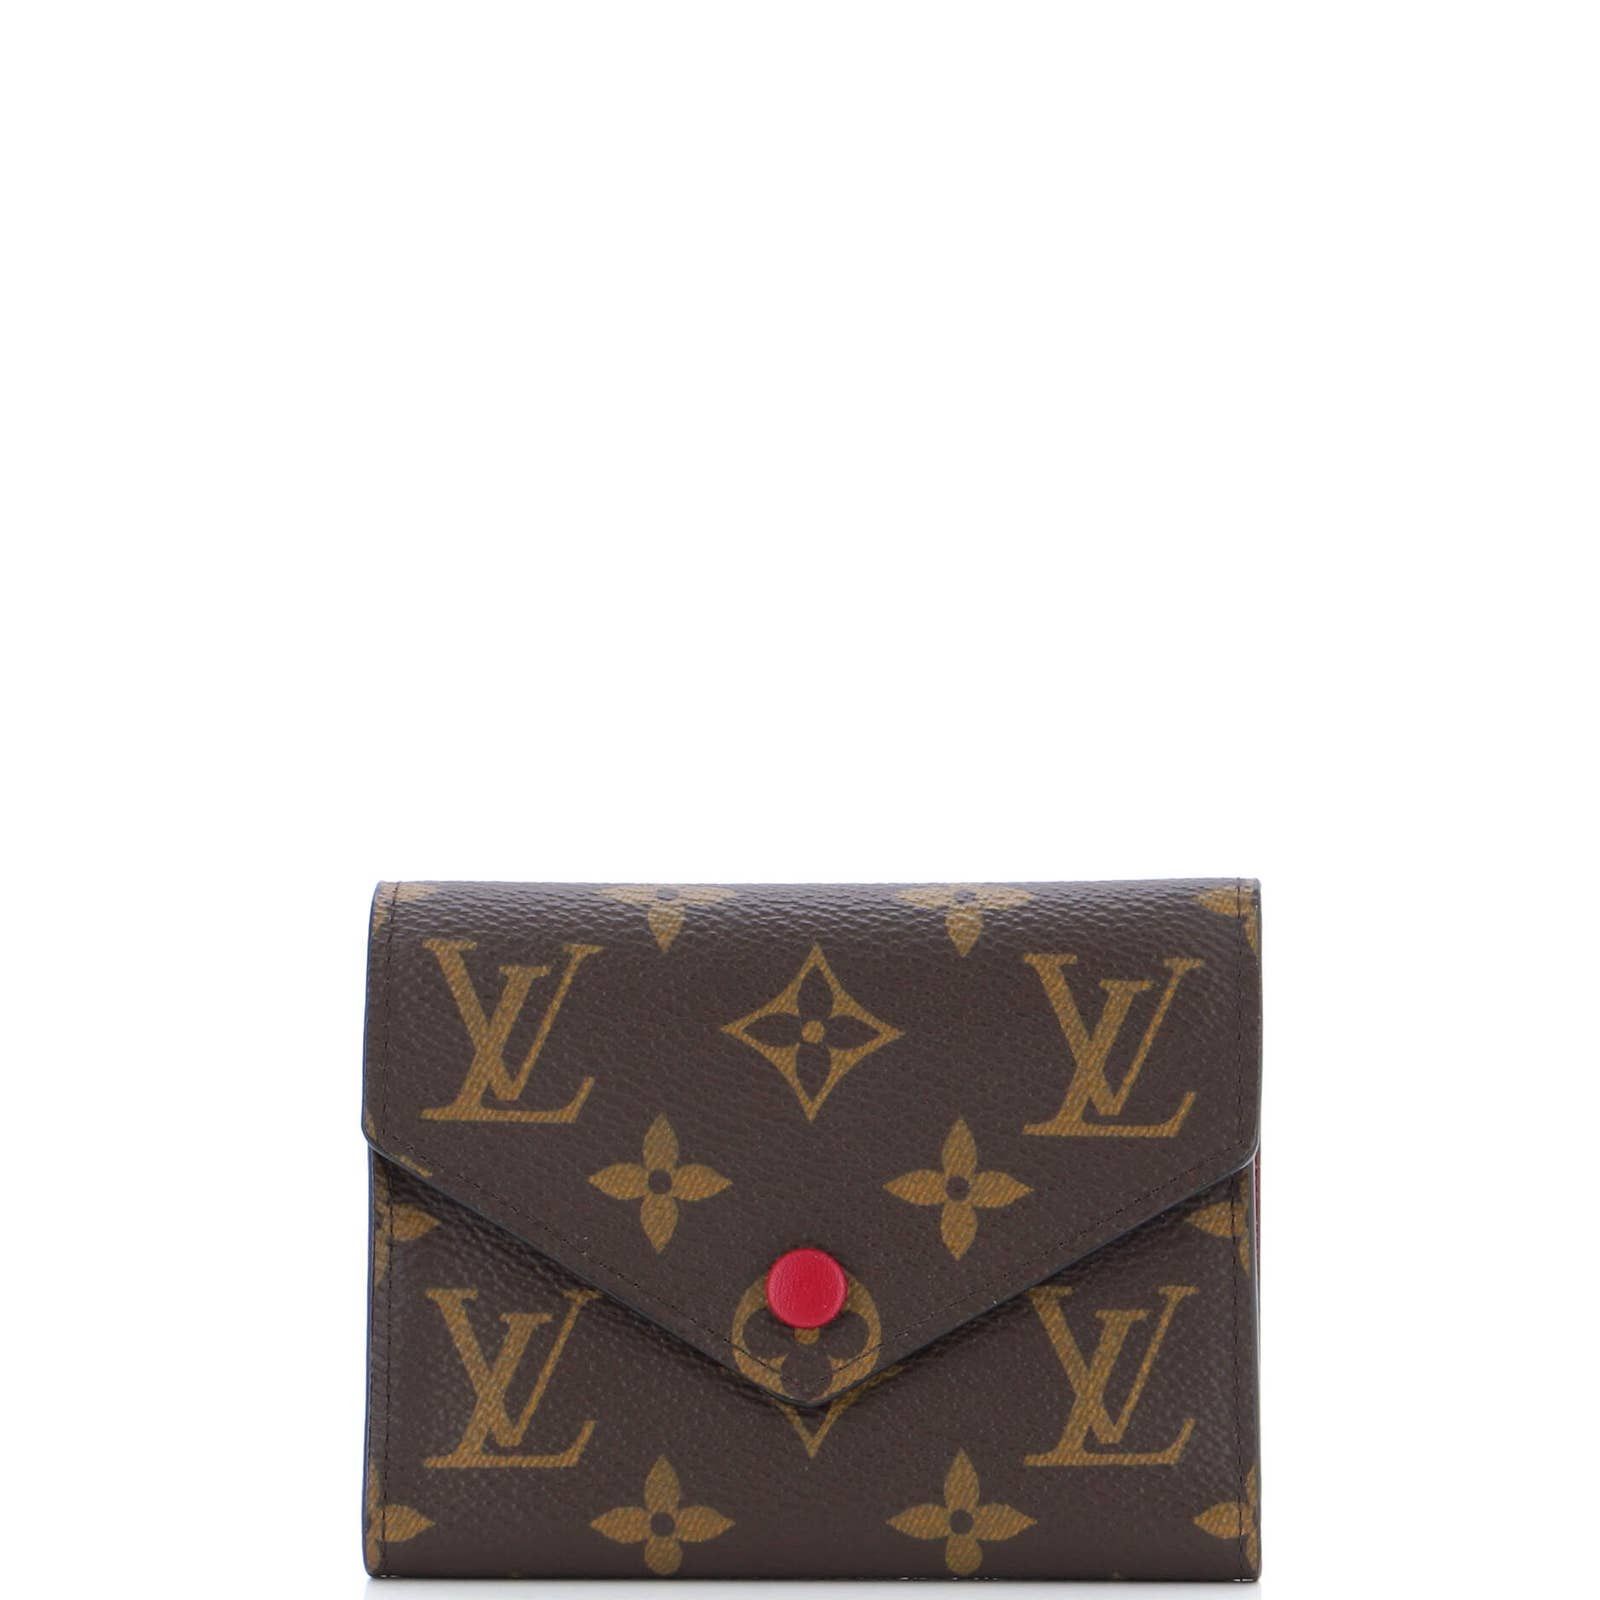 Louis Vuitton Monogram Canvas Victorine Wallet at Jill's Consignment